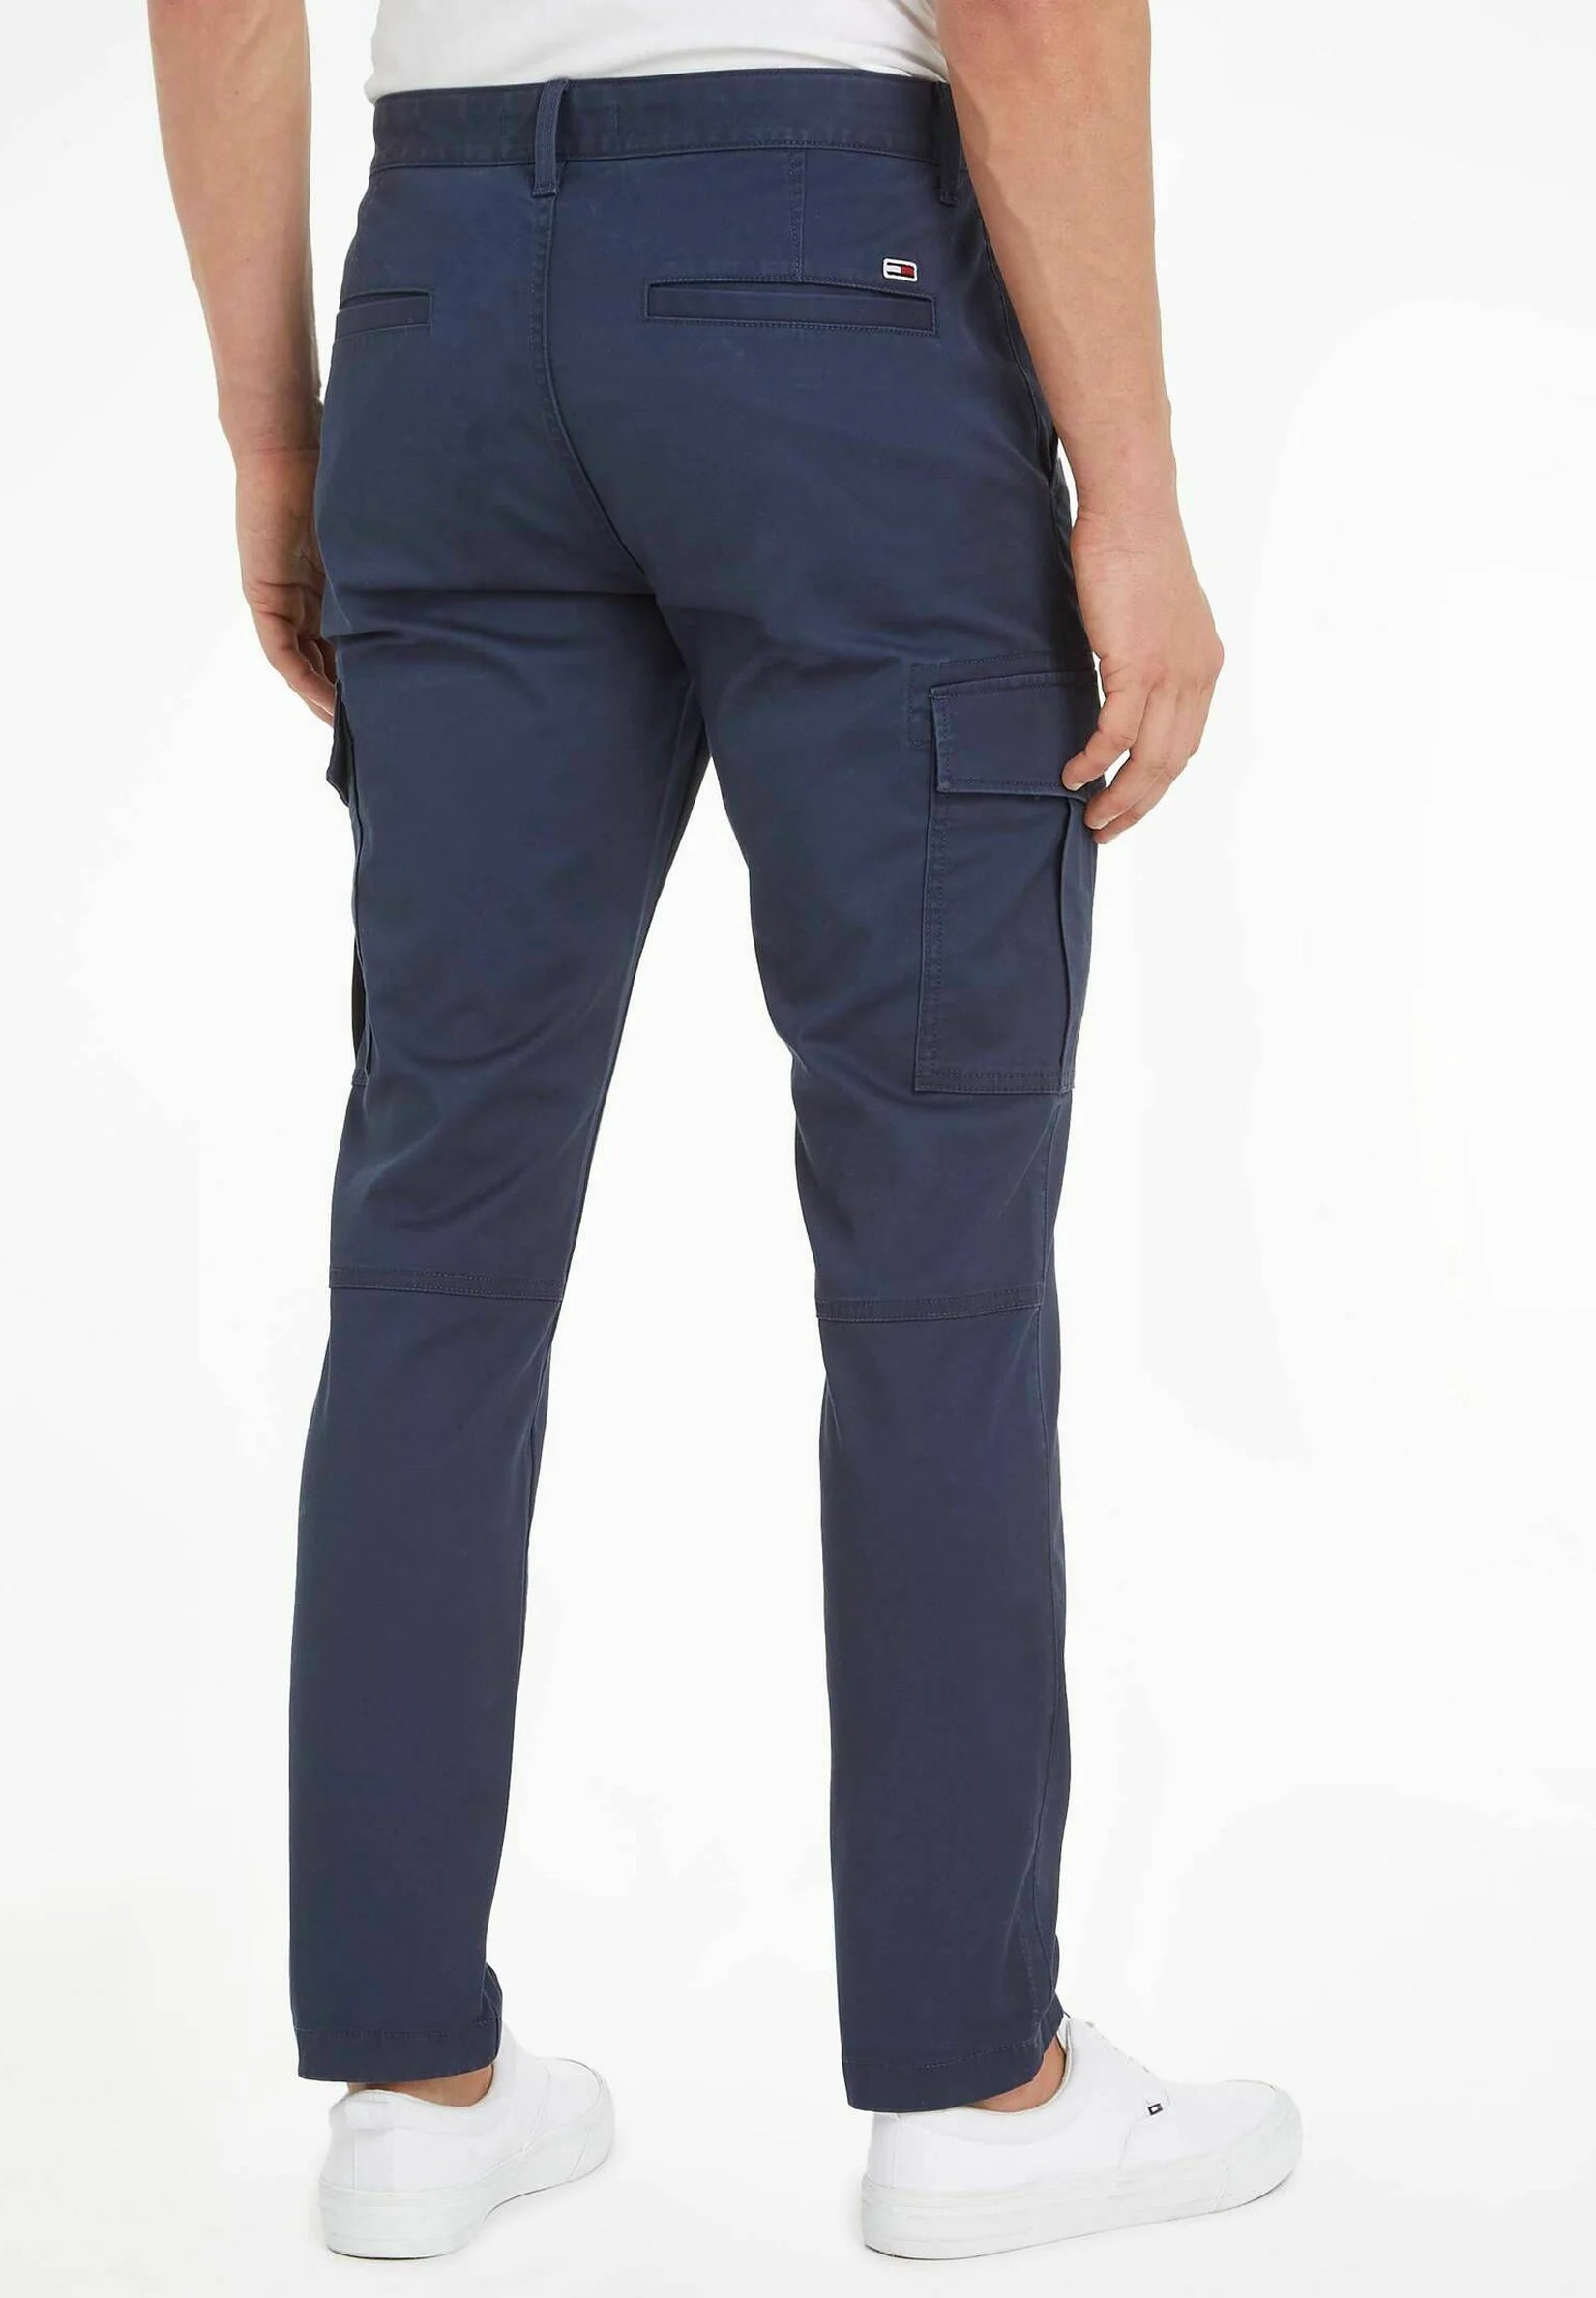 Pantalon cargo Tommy Jeans marine en coton bio stretch | Georgespaul